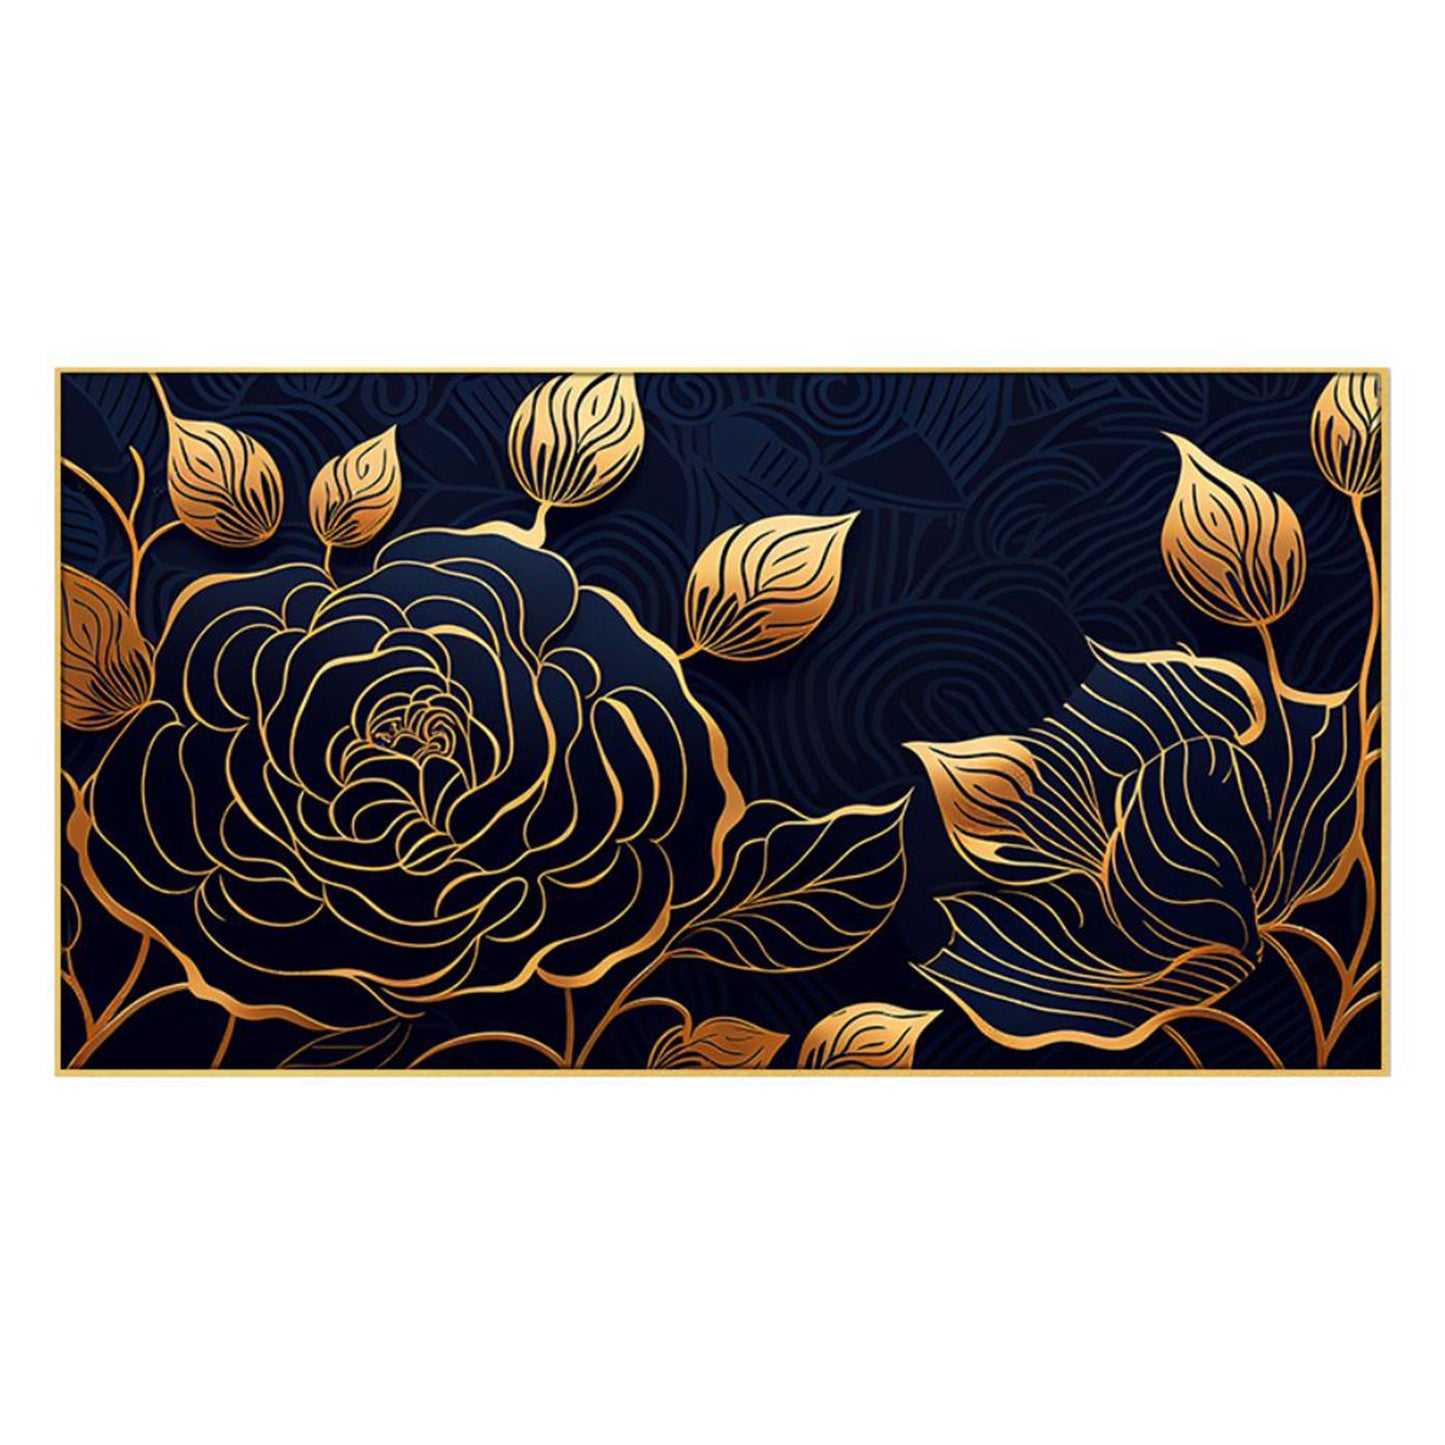 Elegant Golden Floral on Black Wall Painting